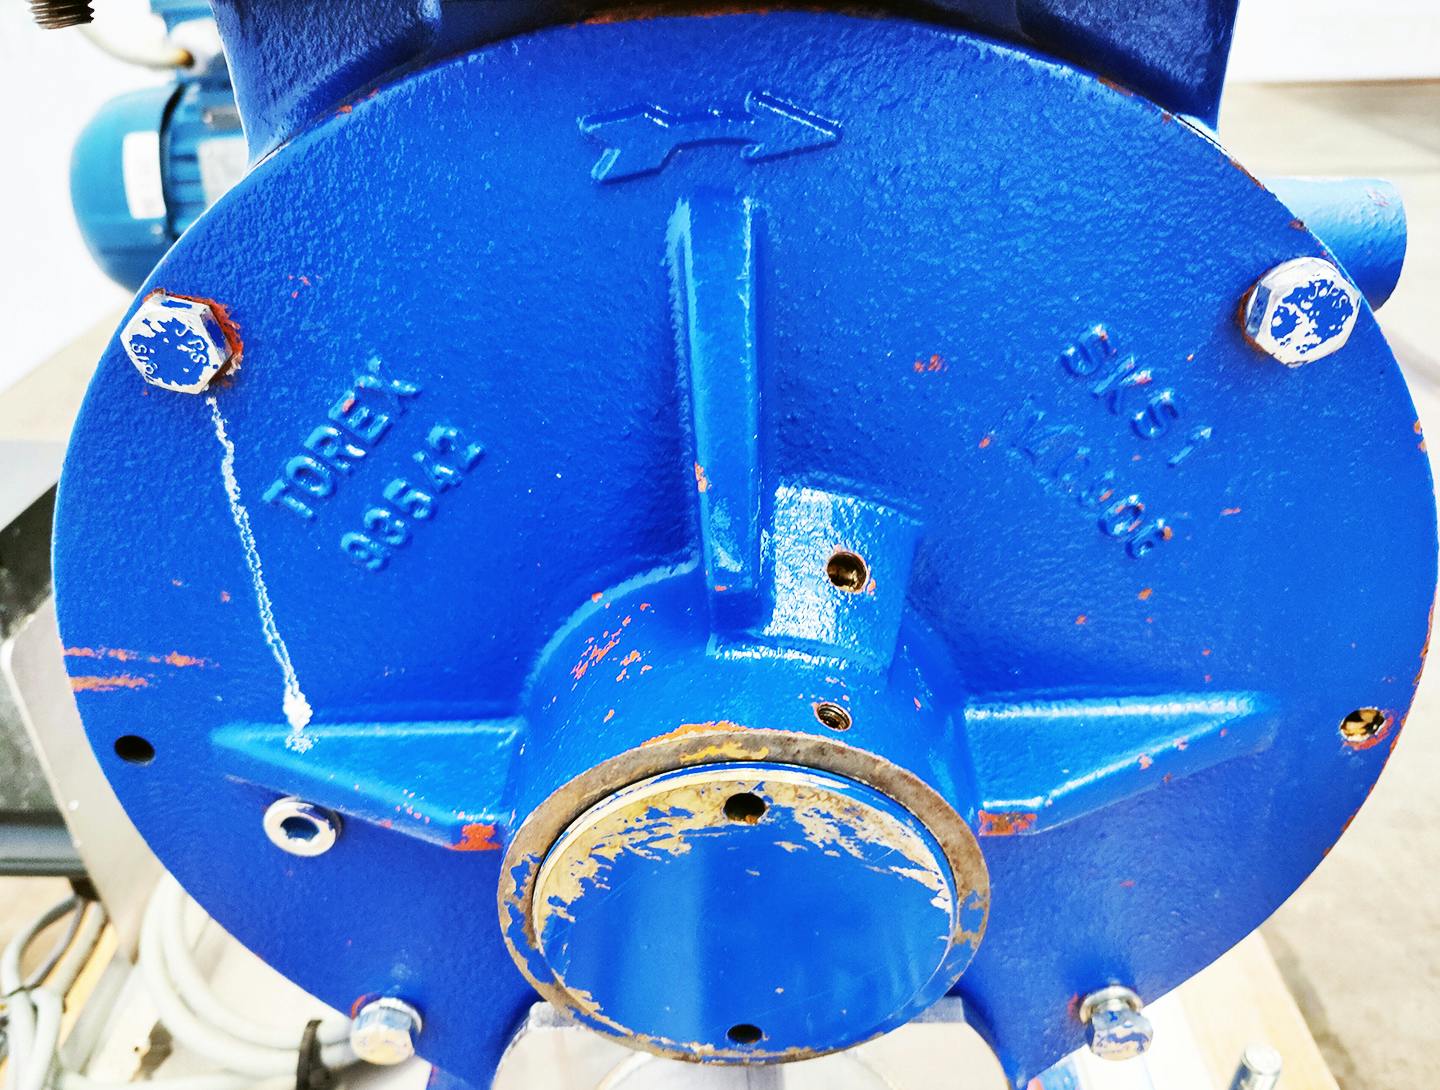 Torex 93502 - Rotating valve - image 11